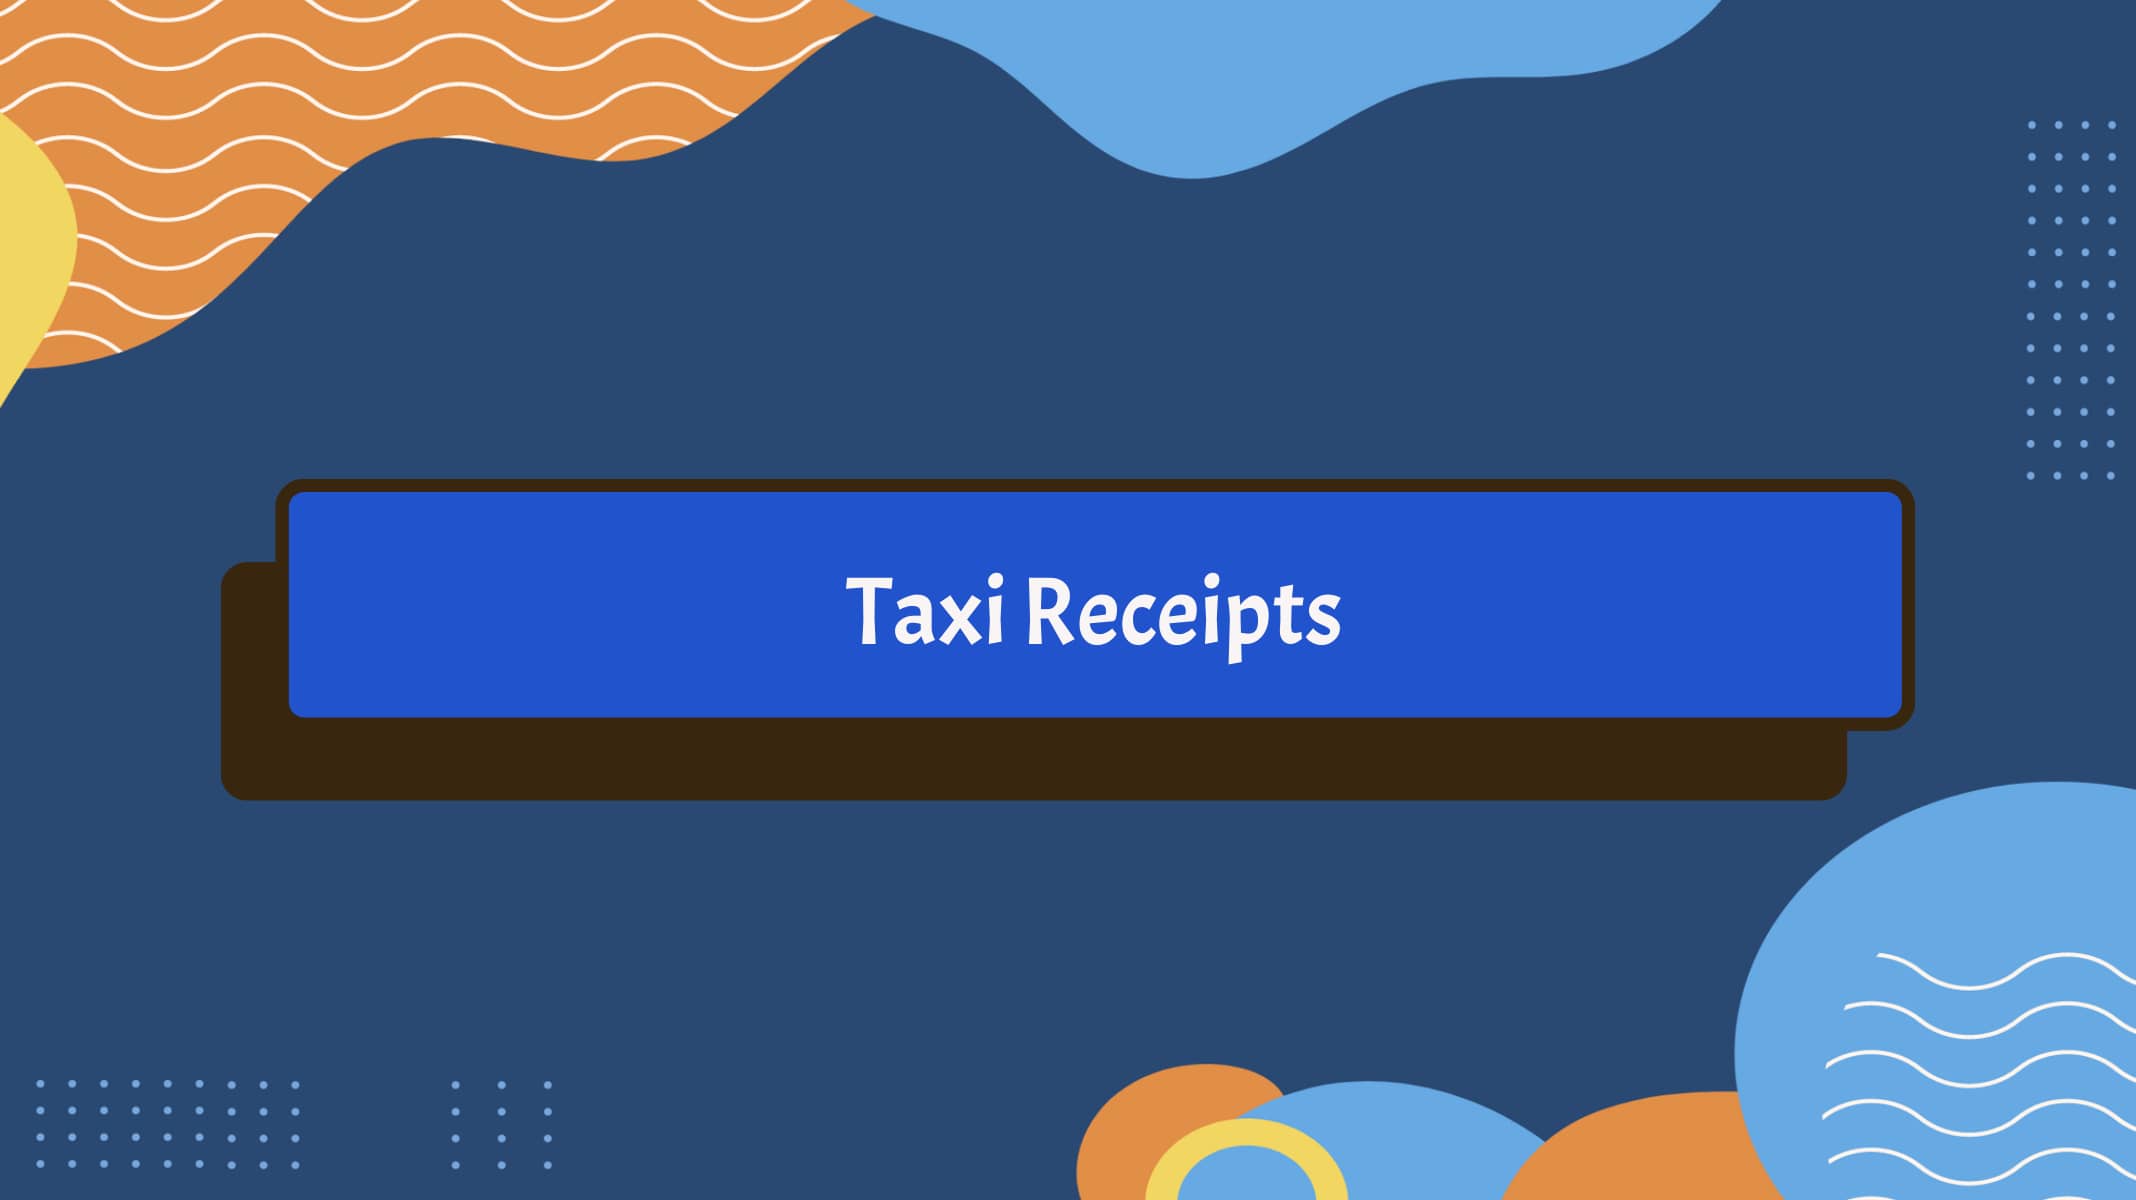 Taxi Receipts